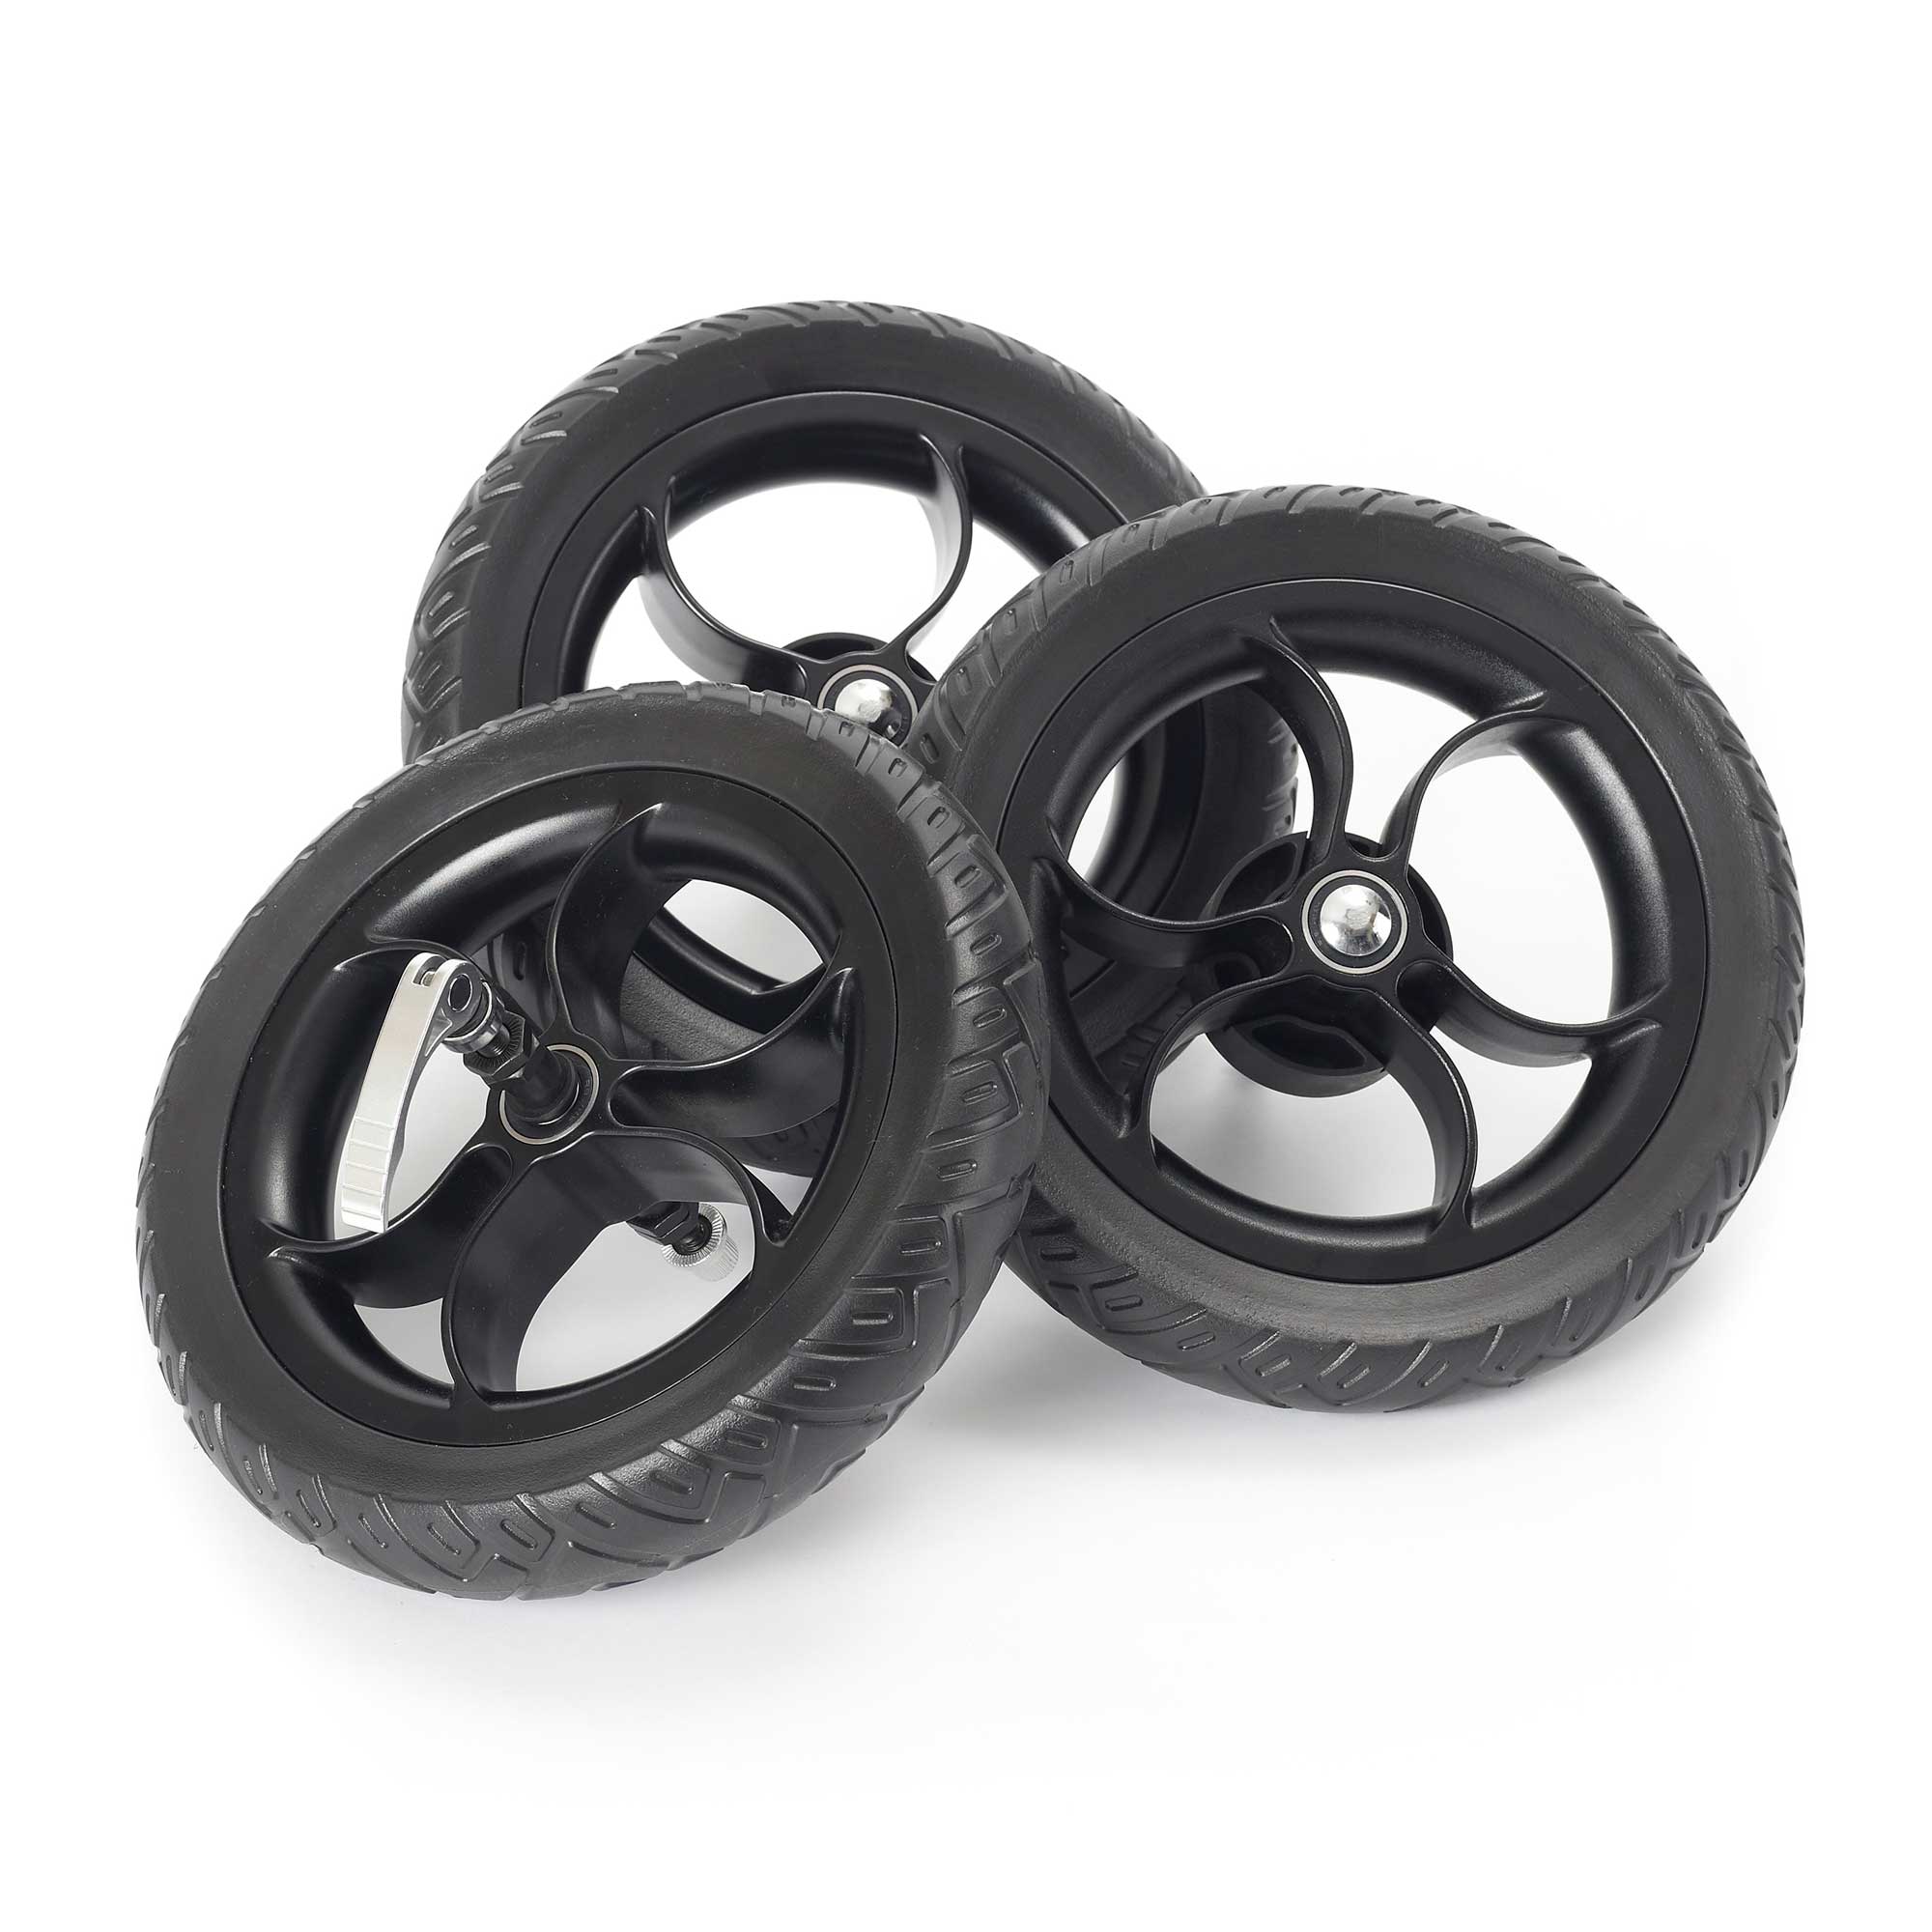 pram wheels and tyres